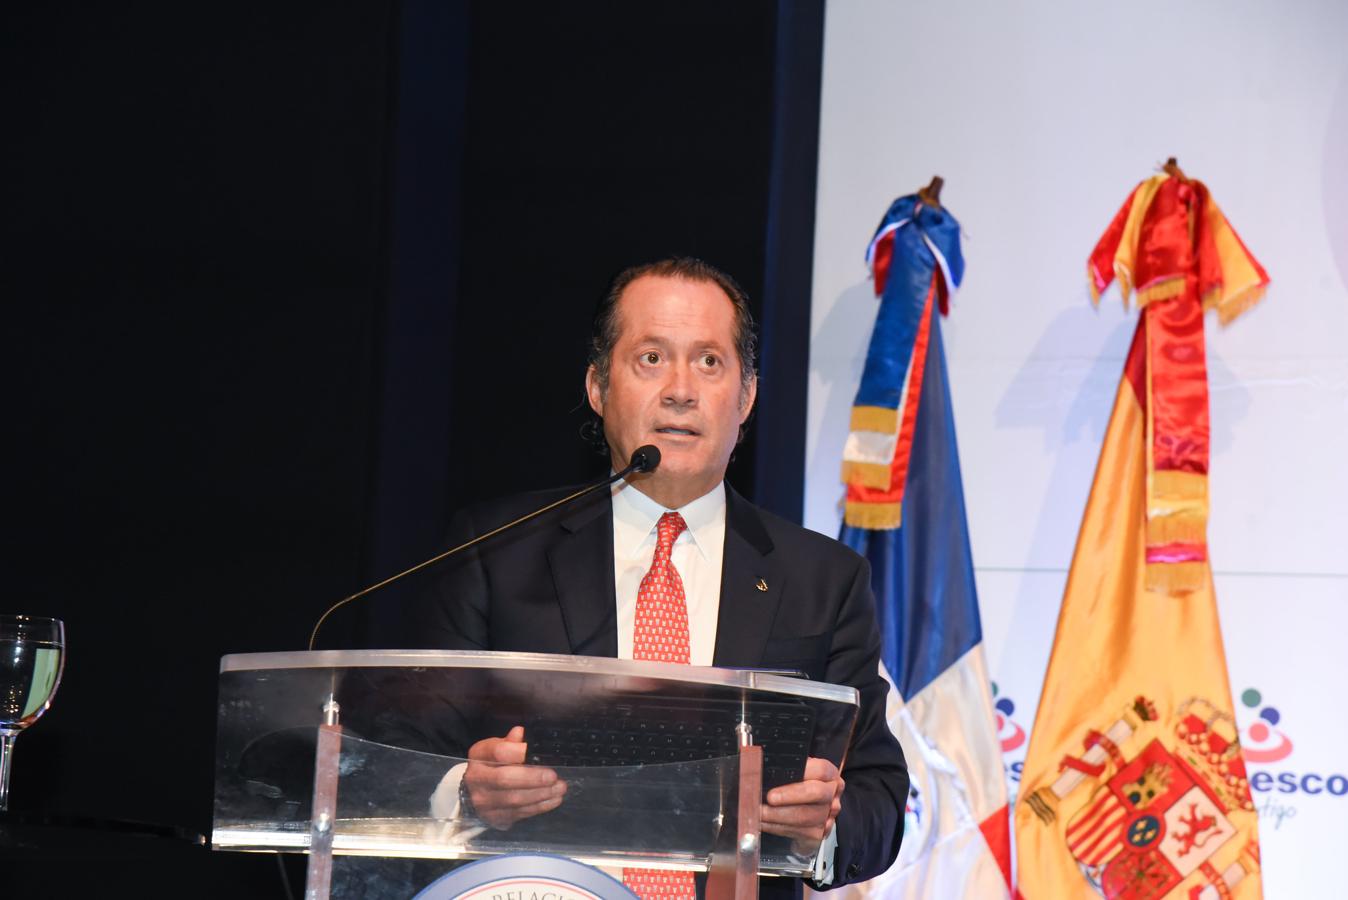 Foros ABC América. Juan Carlos Escotet, presidente de Banesco, durante su intervención en República Dominicana en los Foros ABC América.